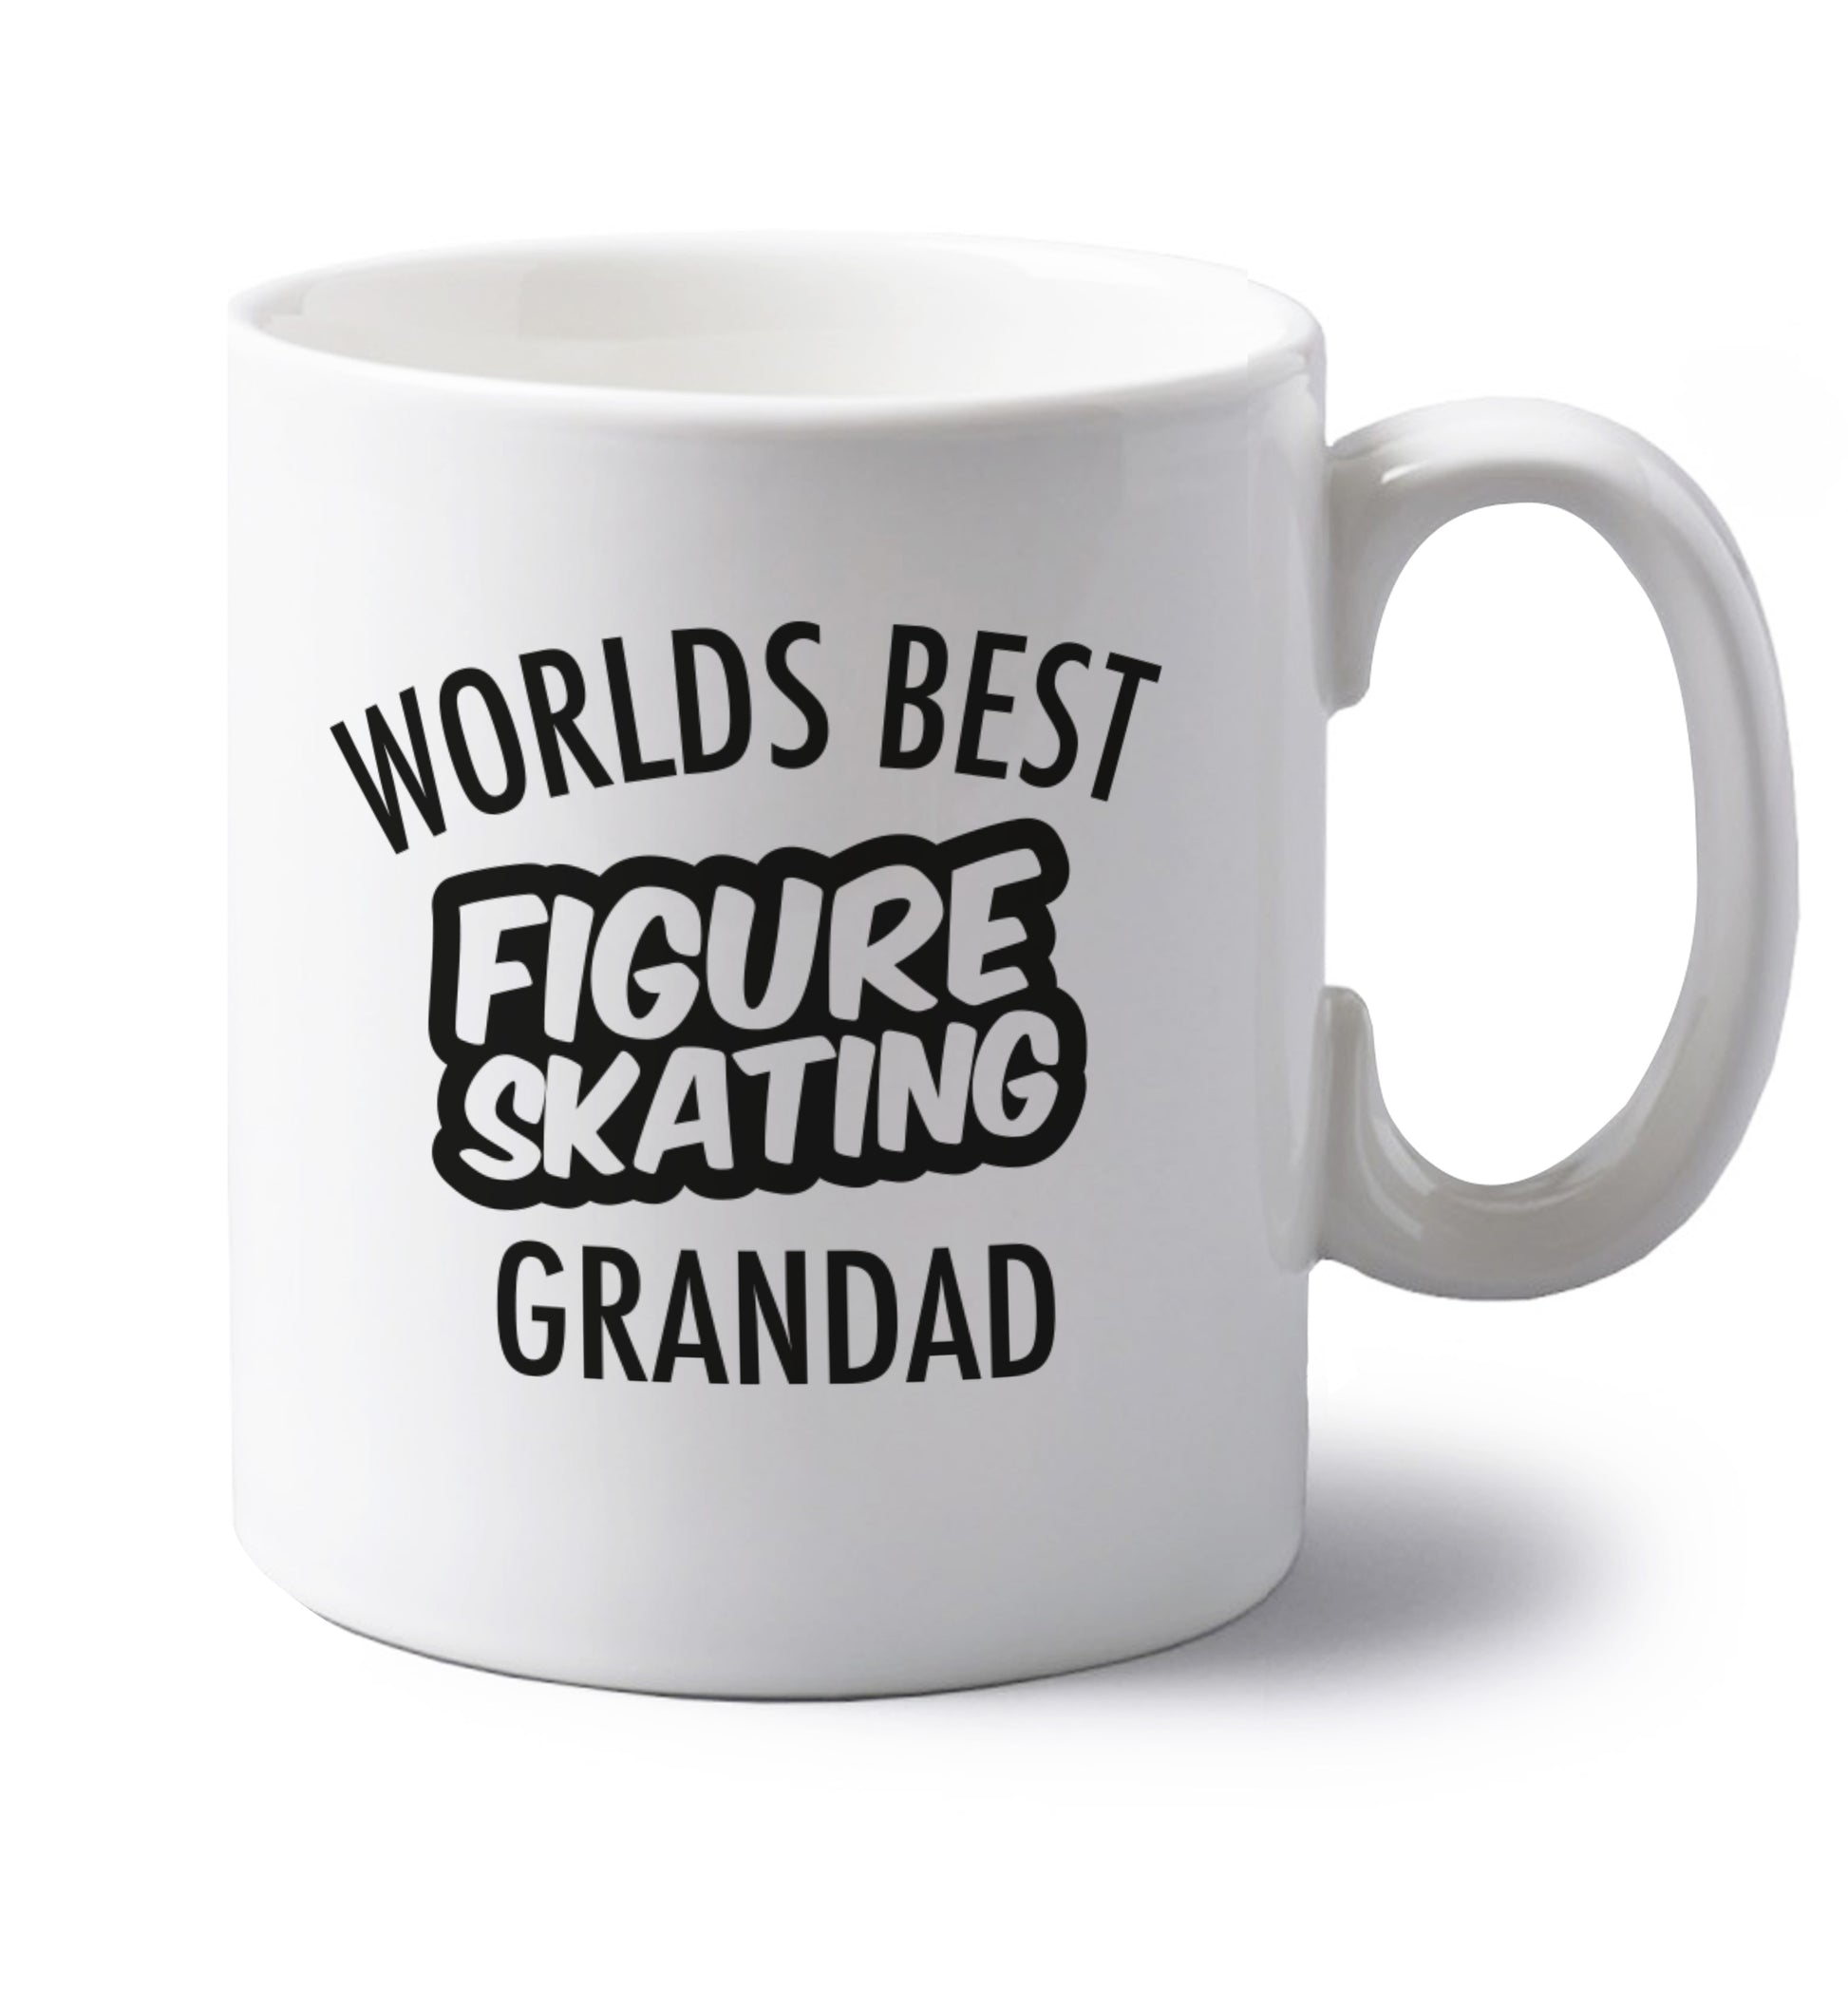 Worlds best figure skating grandad left handed white ceramic mug 